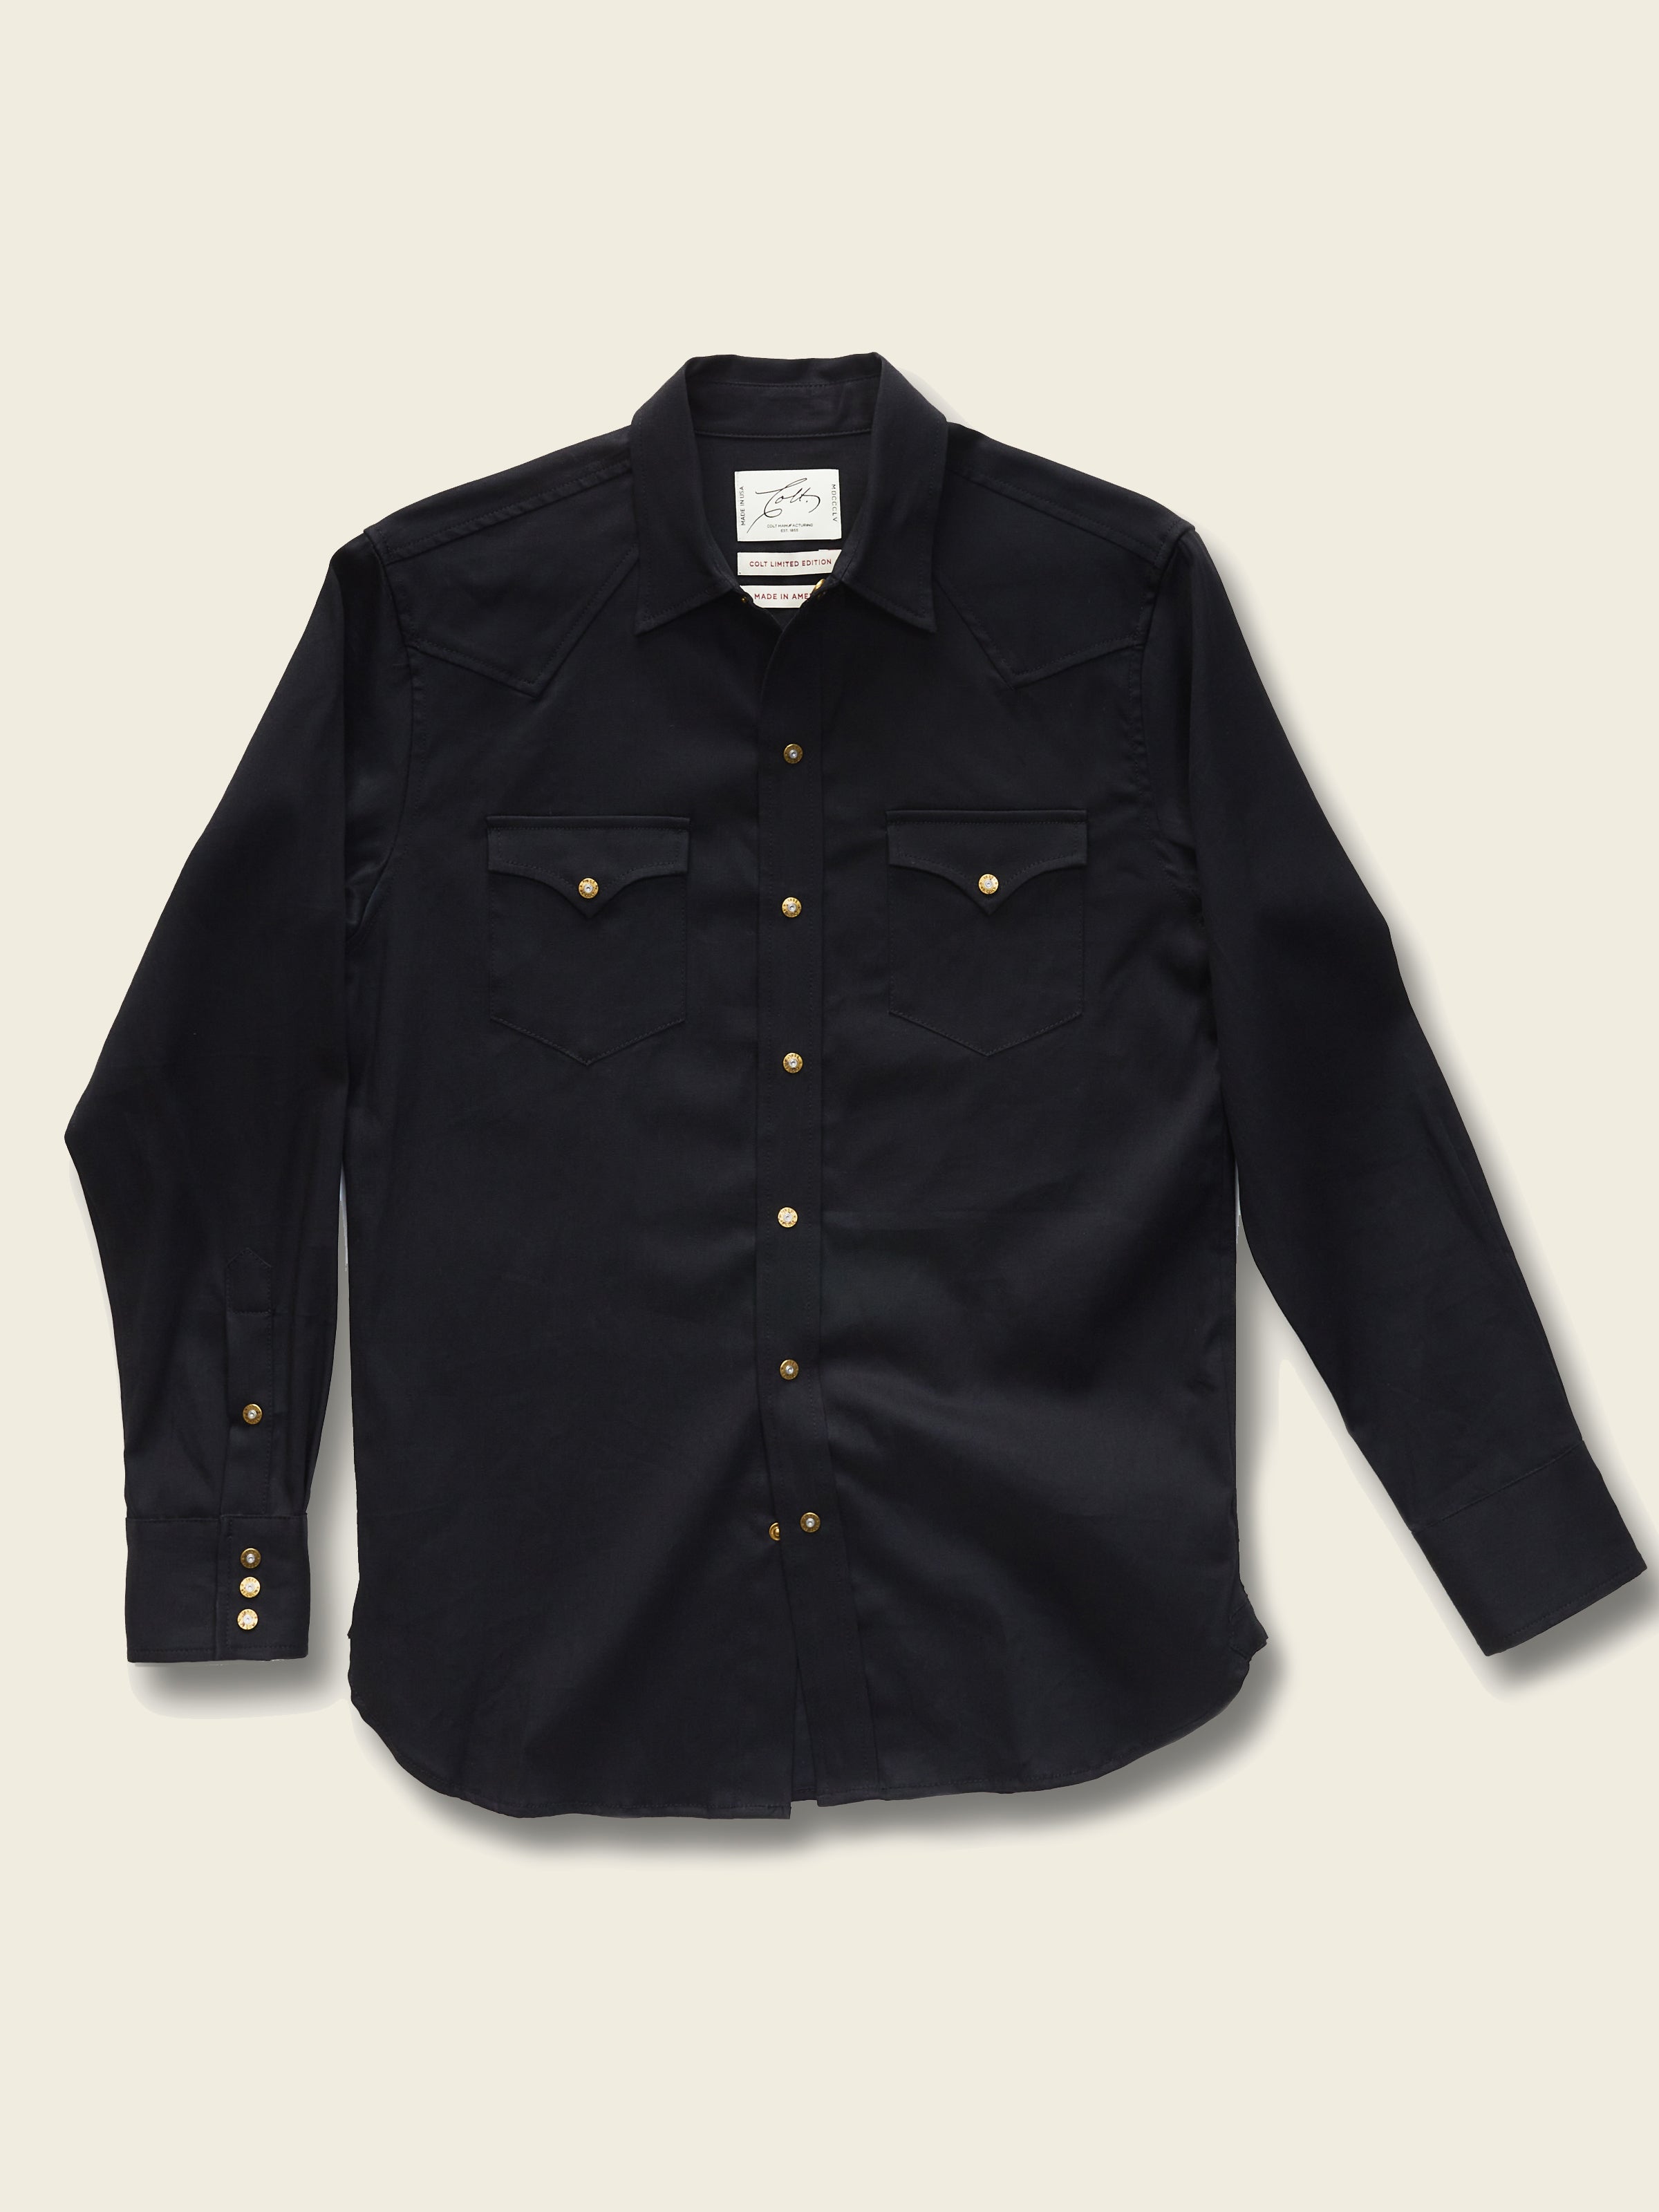 Western Shirt - 5.6oz. Japanese Stretch Black